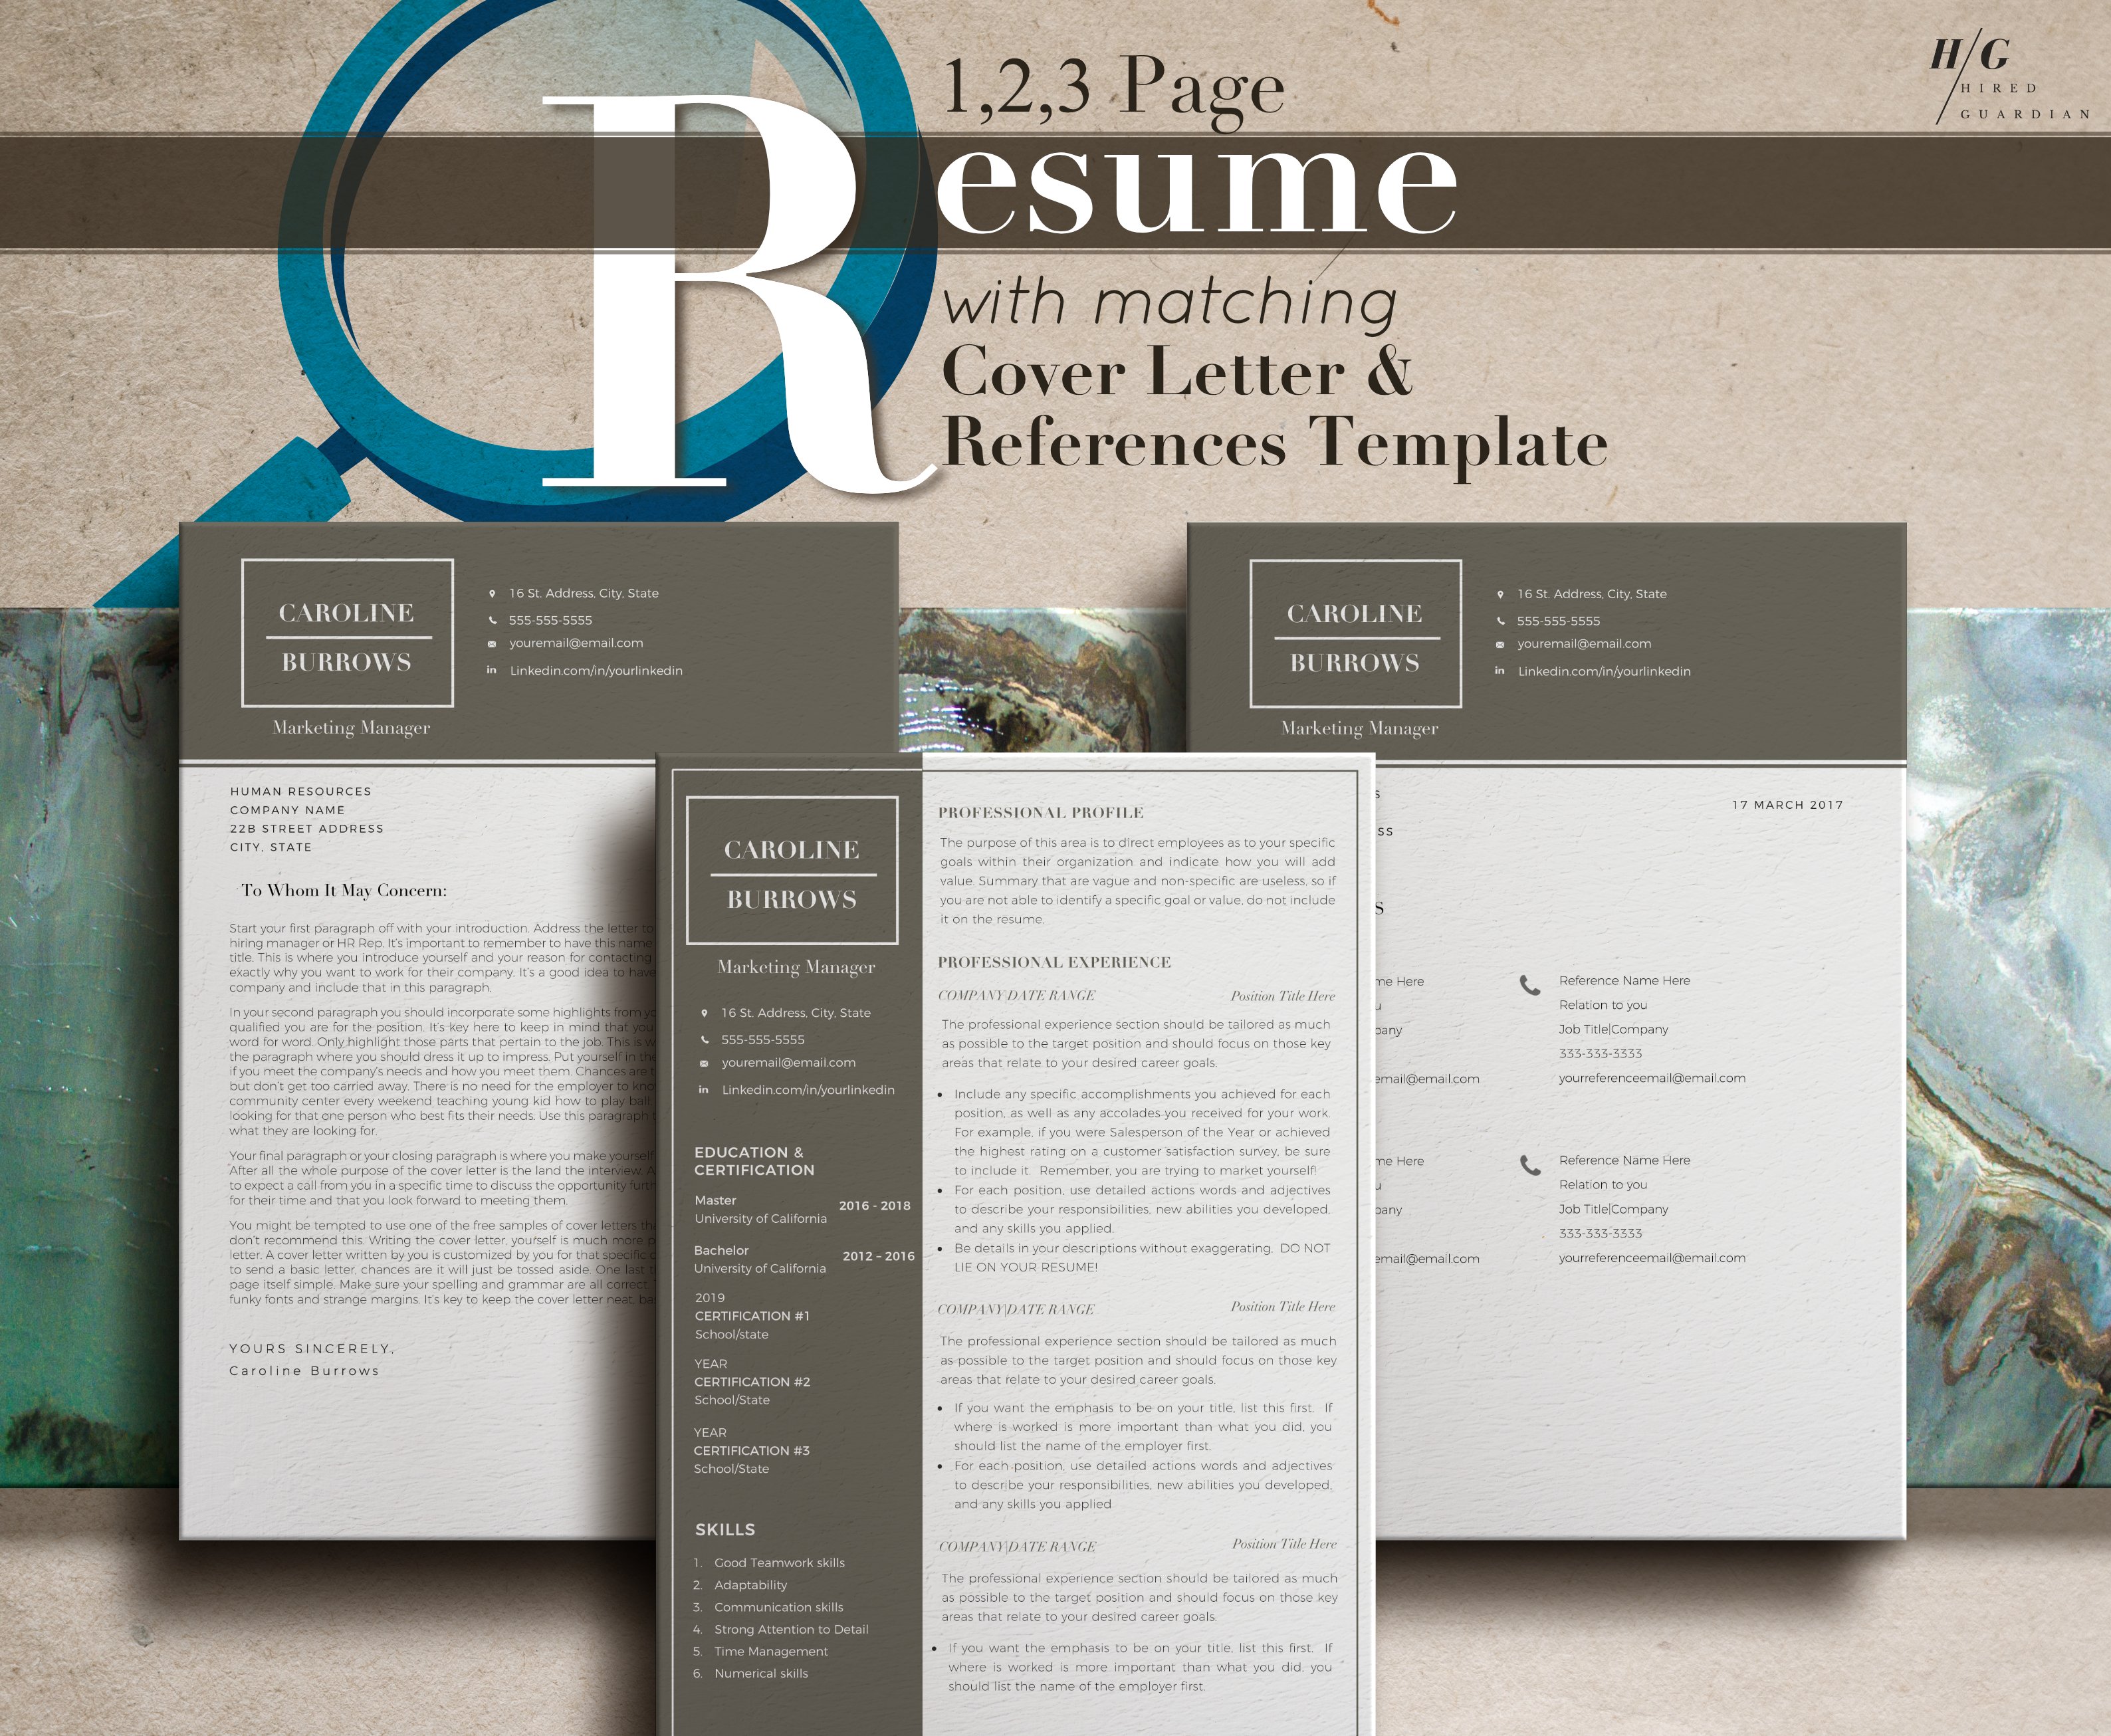 4 3 page resume template lebenslauf vorlage resume template with cover letter resume copy copy copy copy copy 3 572